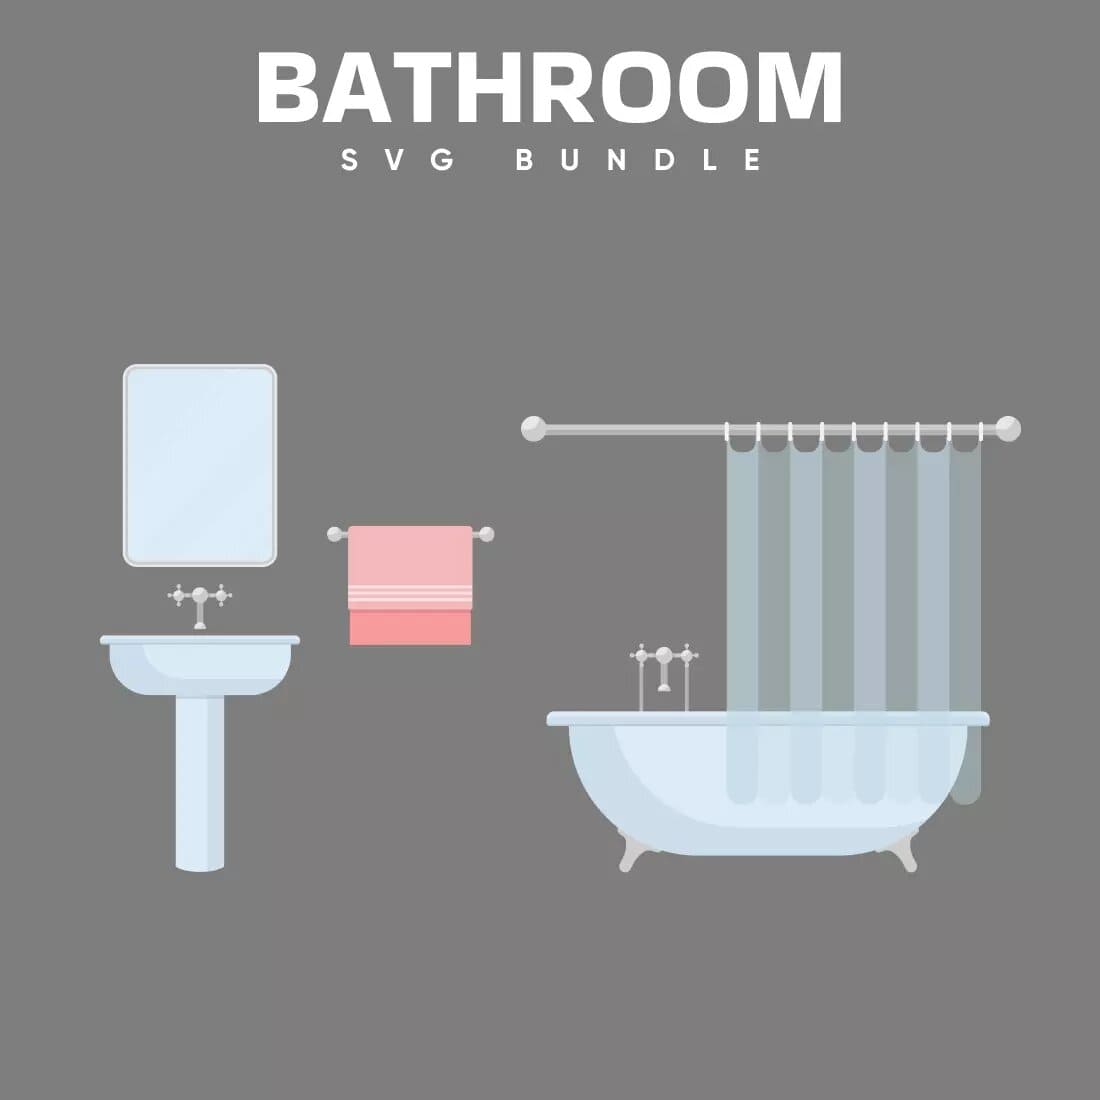 Extensive Bathroom SVG Bundle Preview 5.